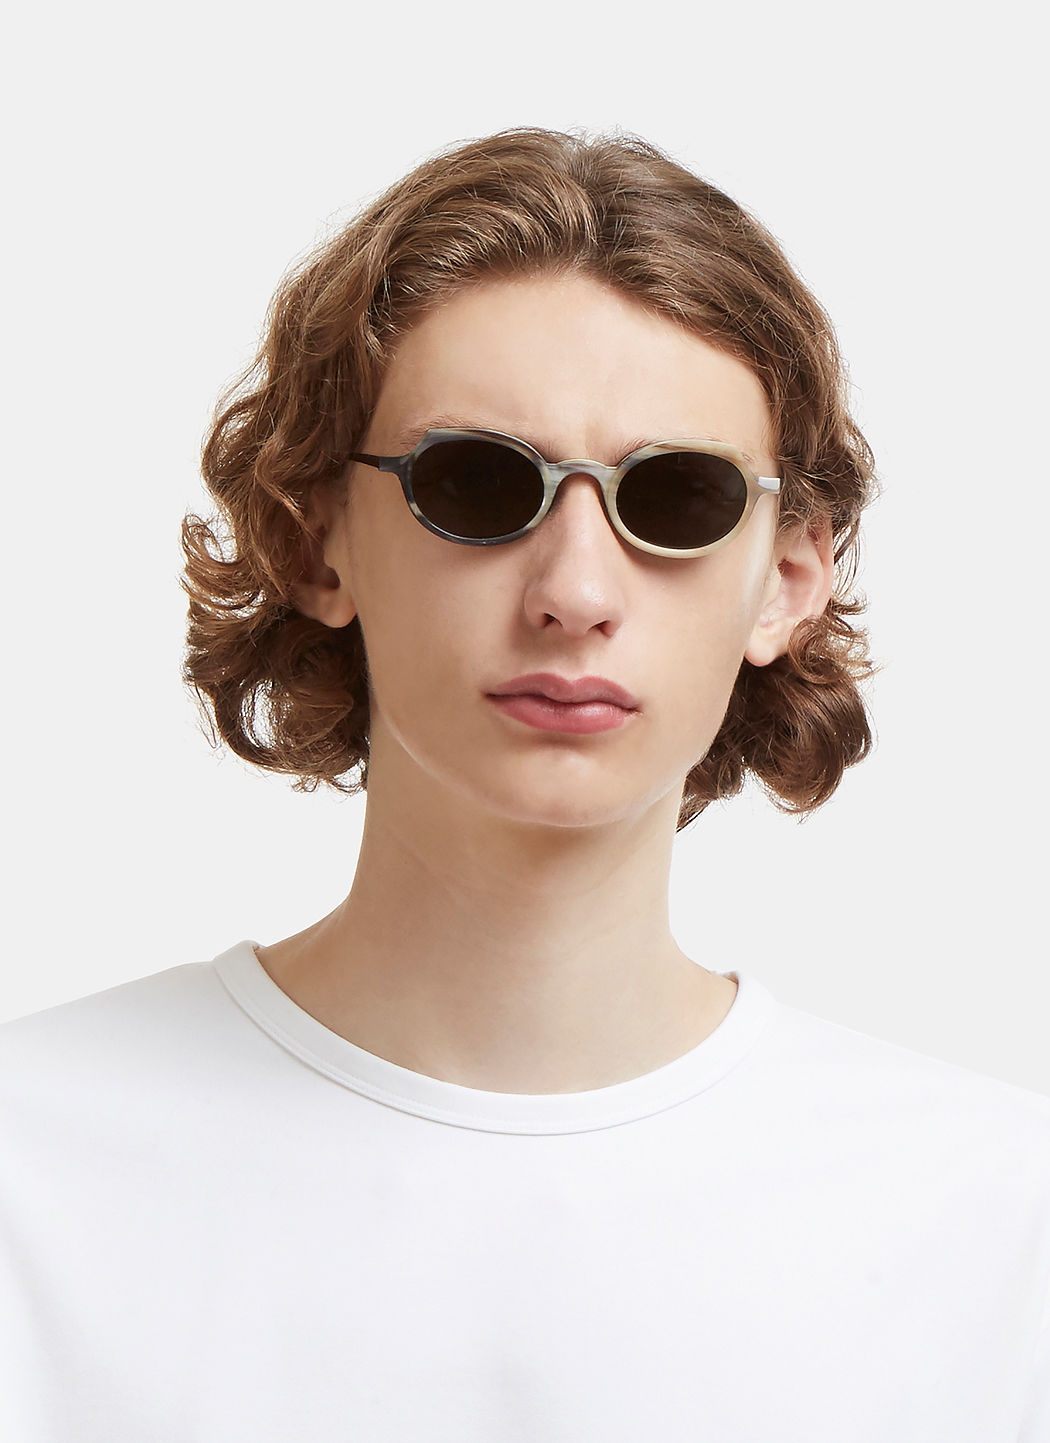 Buy Rigards Prescription Eyewear Sunglasses Wooden Glasses Online Shop About